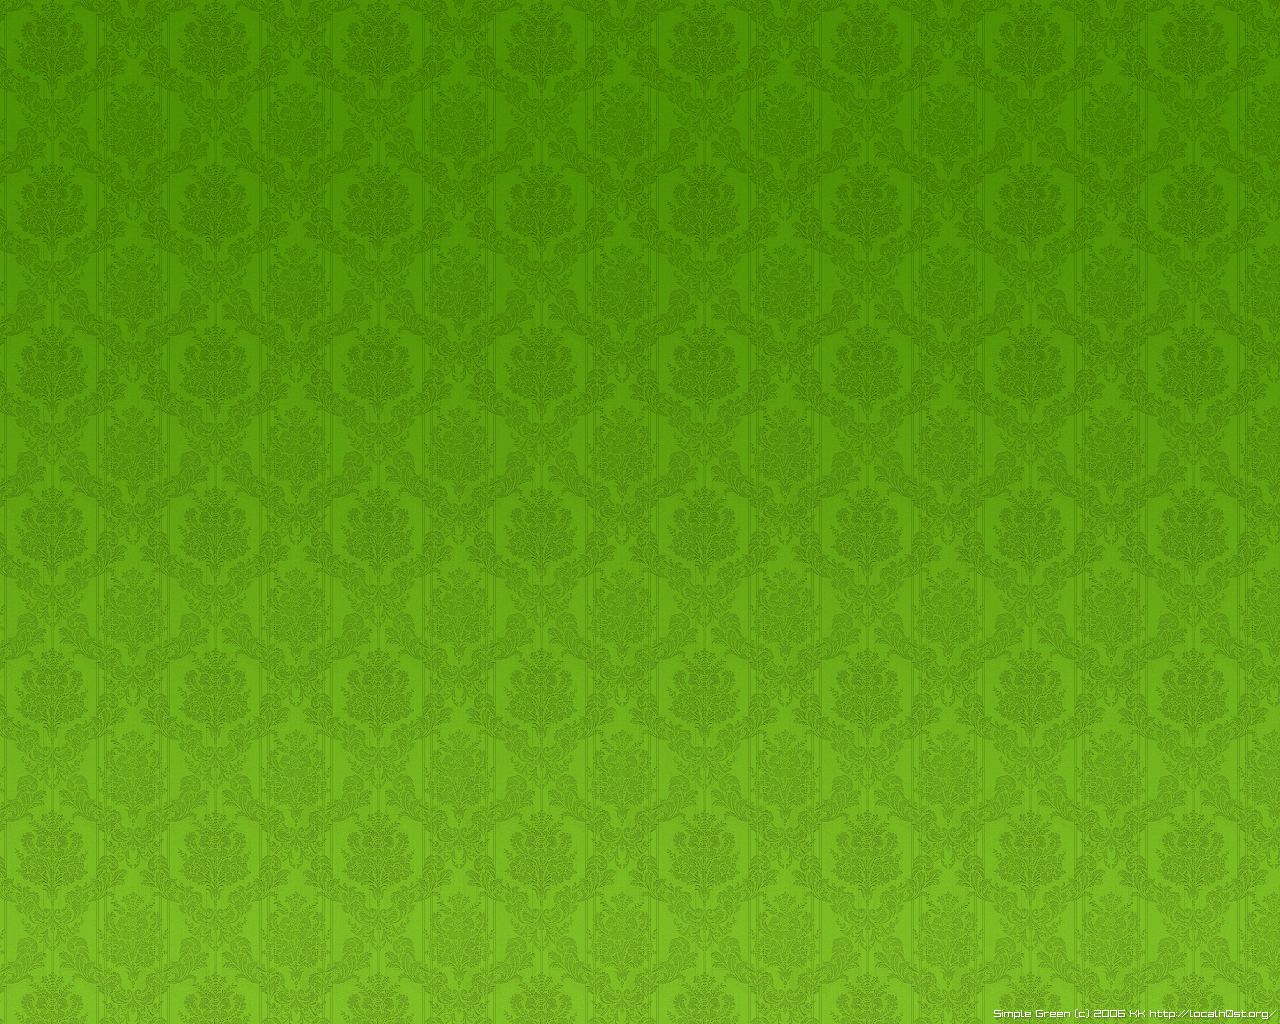 Green - Green Photo (1101010) - Fanpop